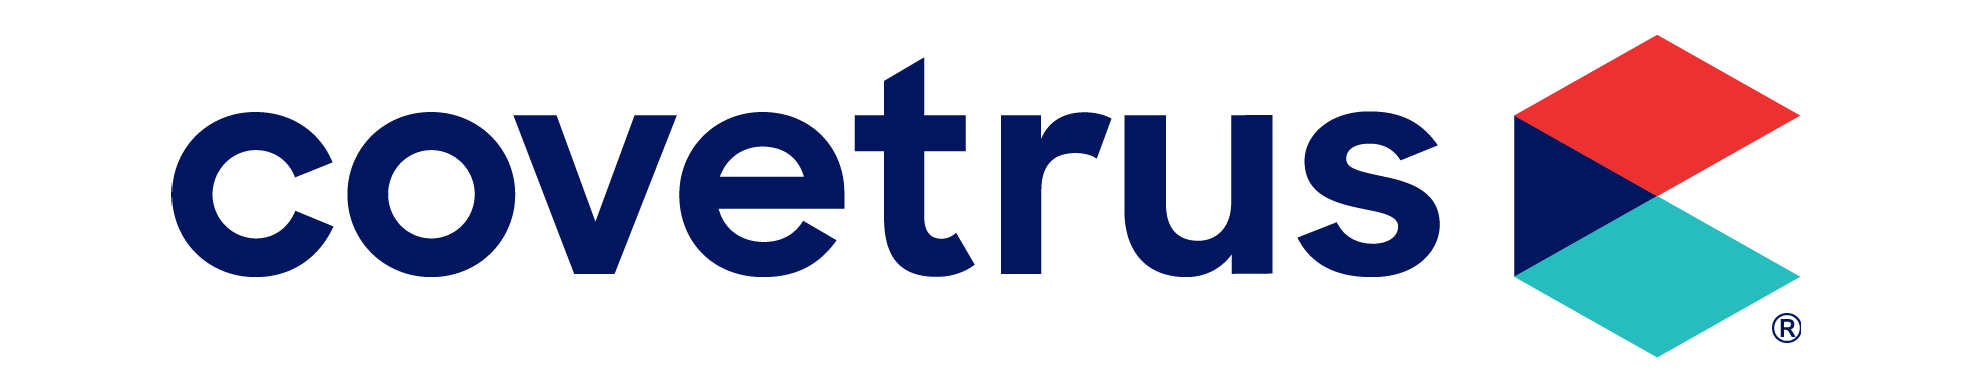 Covetrus Full Logo